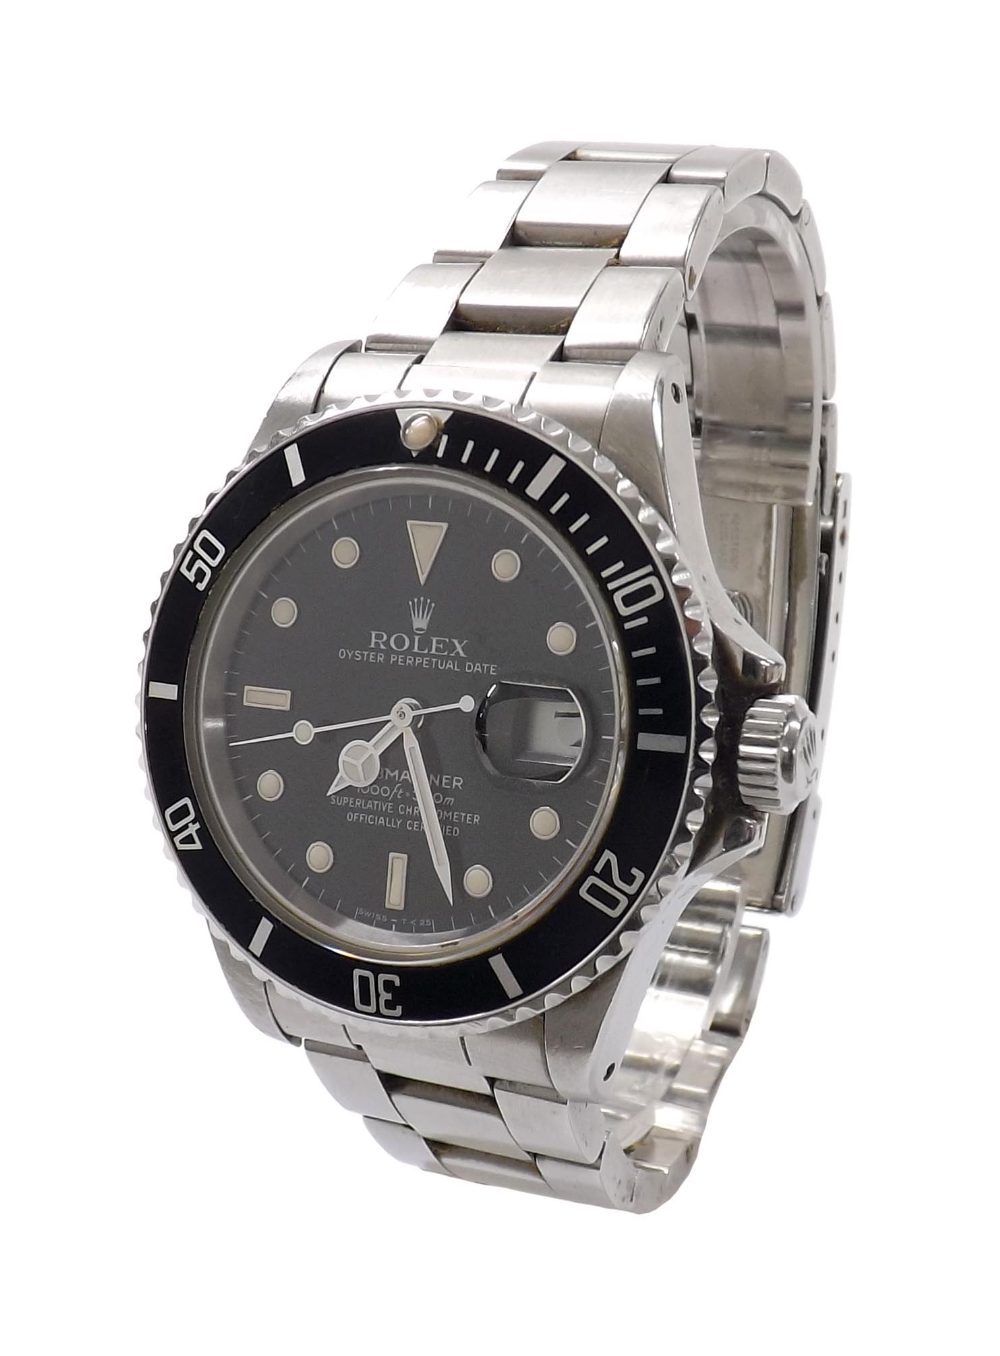 Rolex Oyster Perpetual Date Submariner stainless steel gentleman's bracelet watch ref. 168000, circa